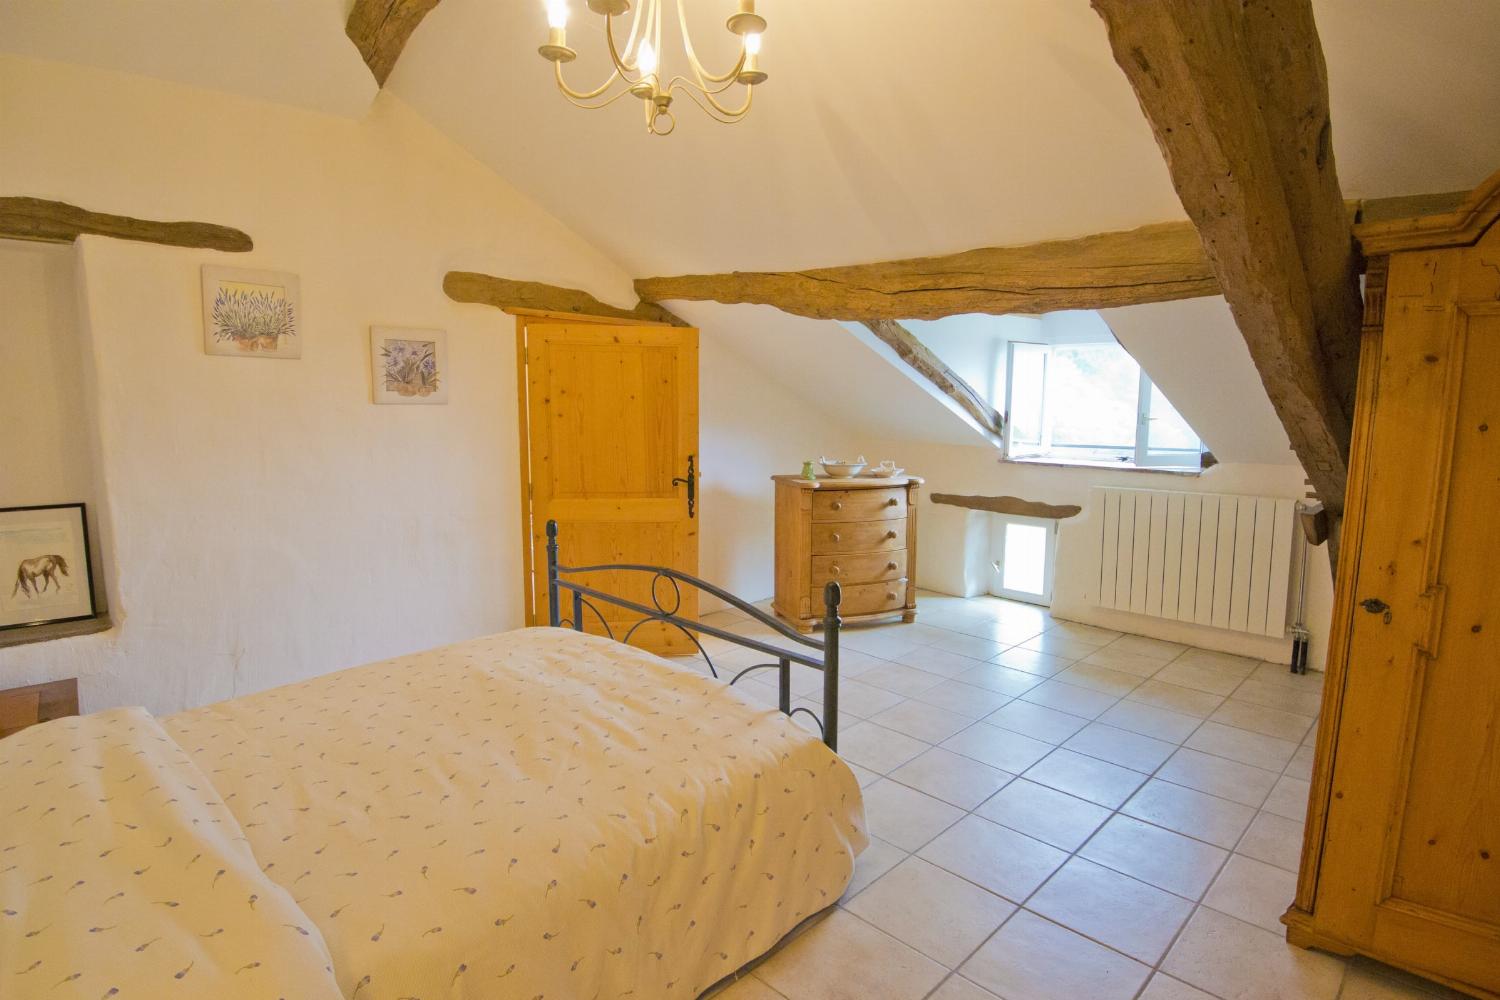 Bedroom | Rental home in Tarn-en-Garonne